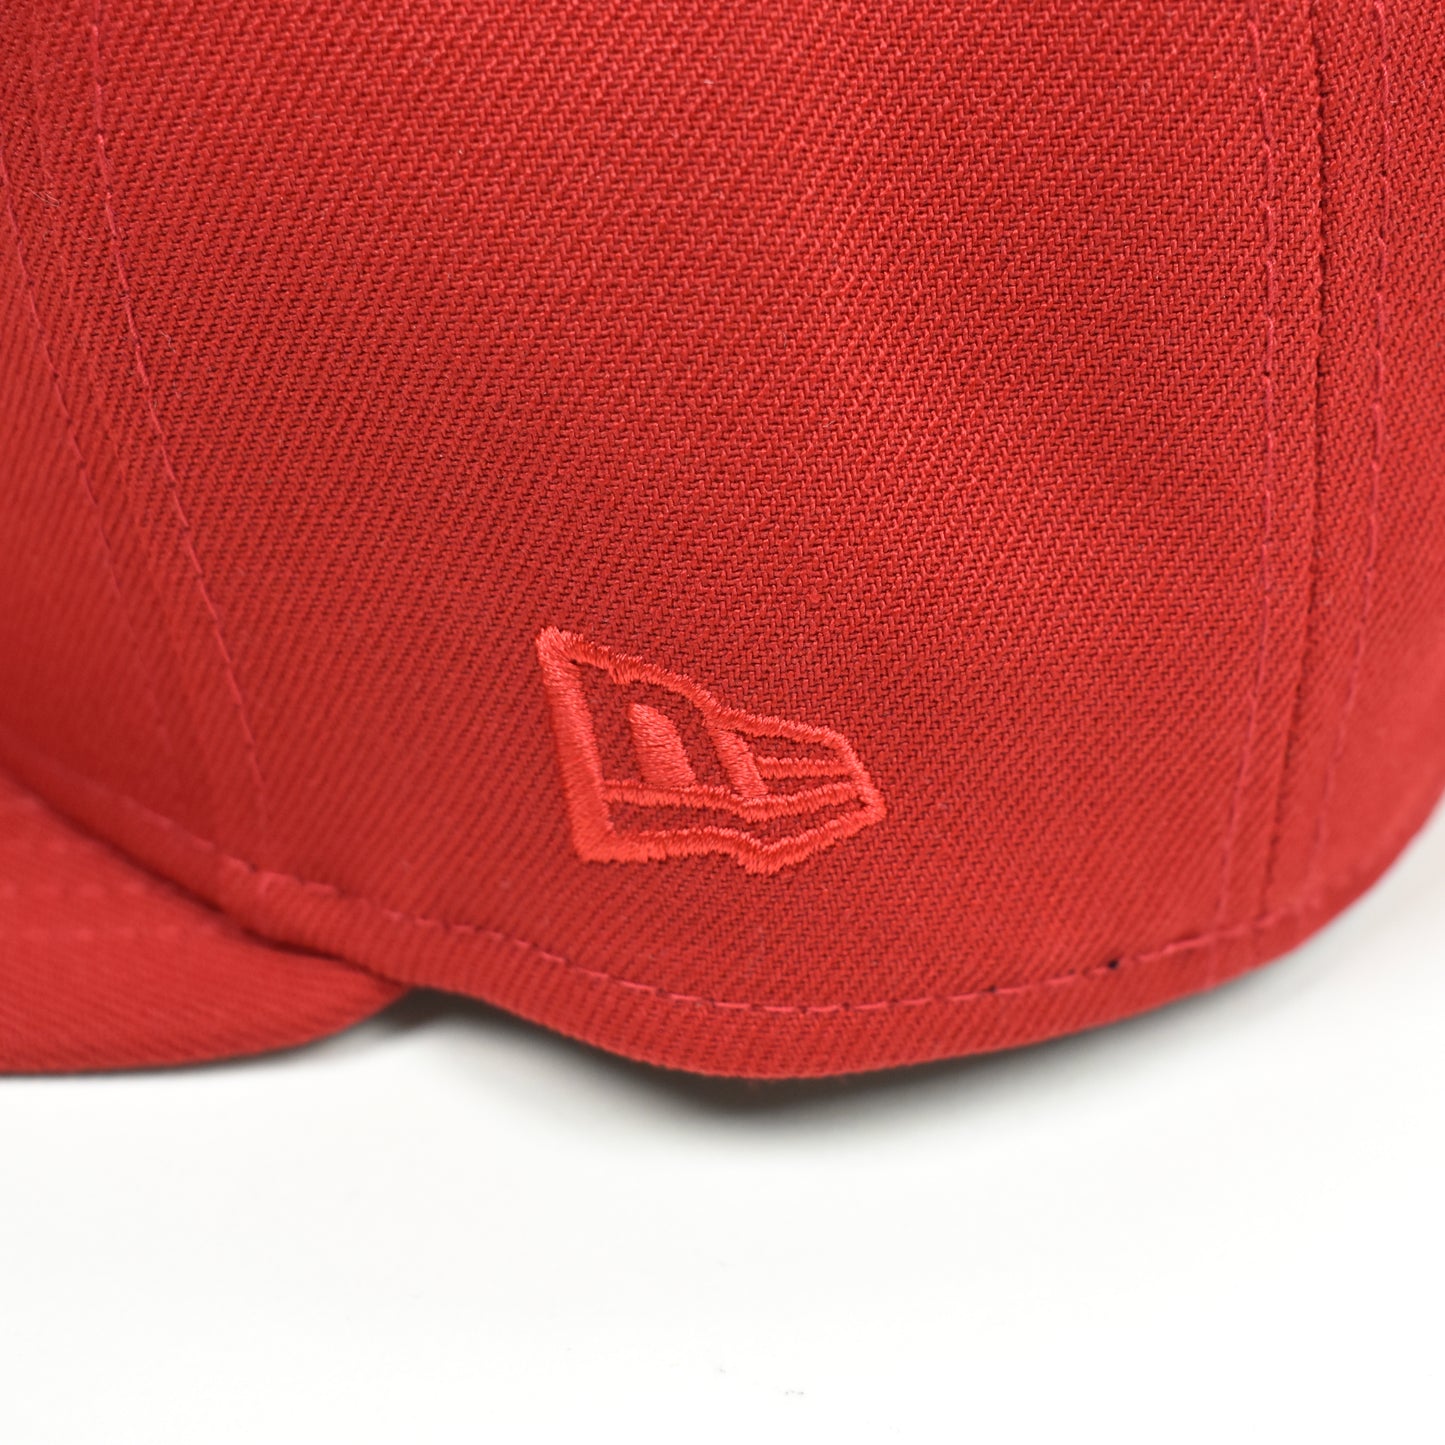 Supreme x New Era - Box Logo Digital Hat w/ Sharpie (Red)